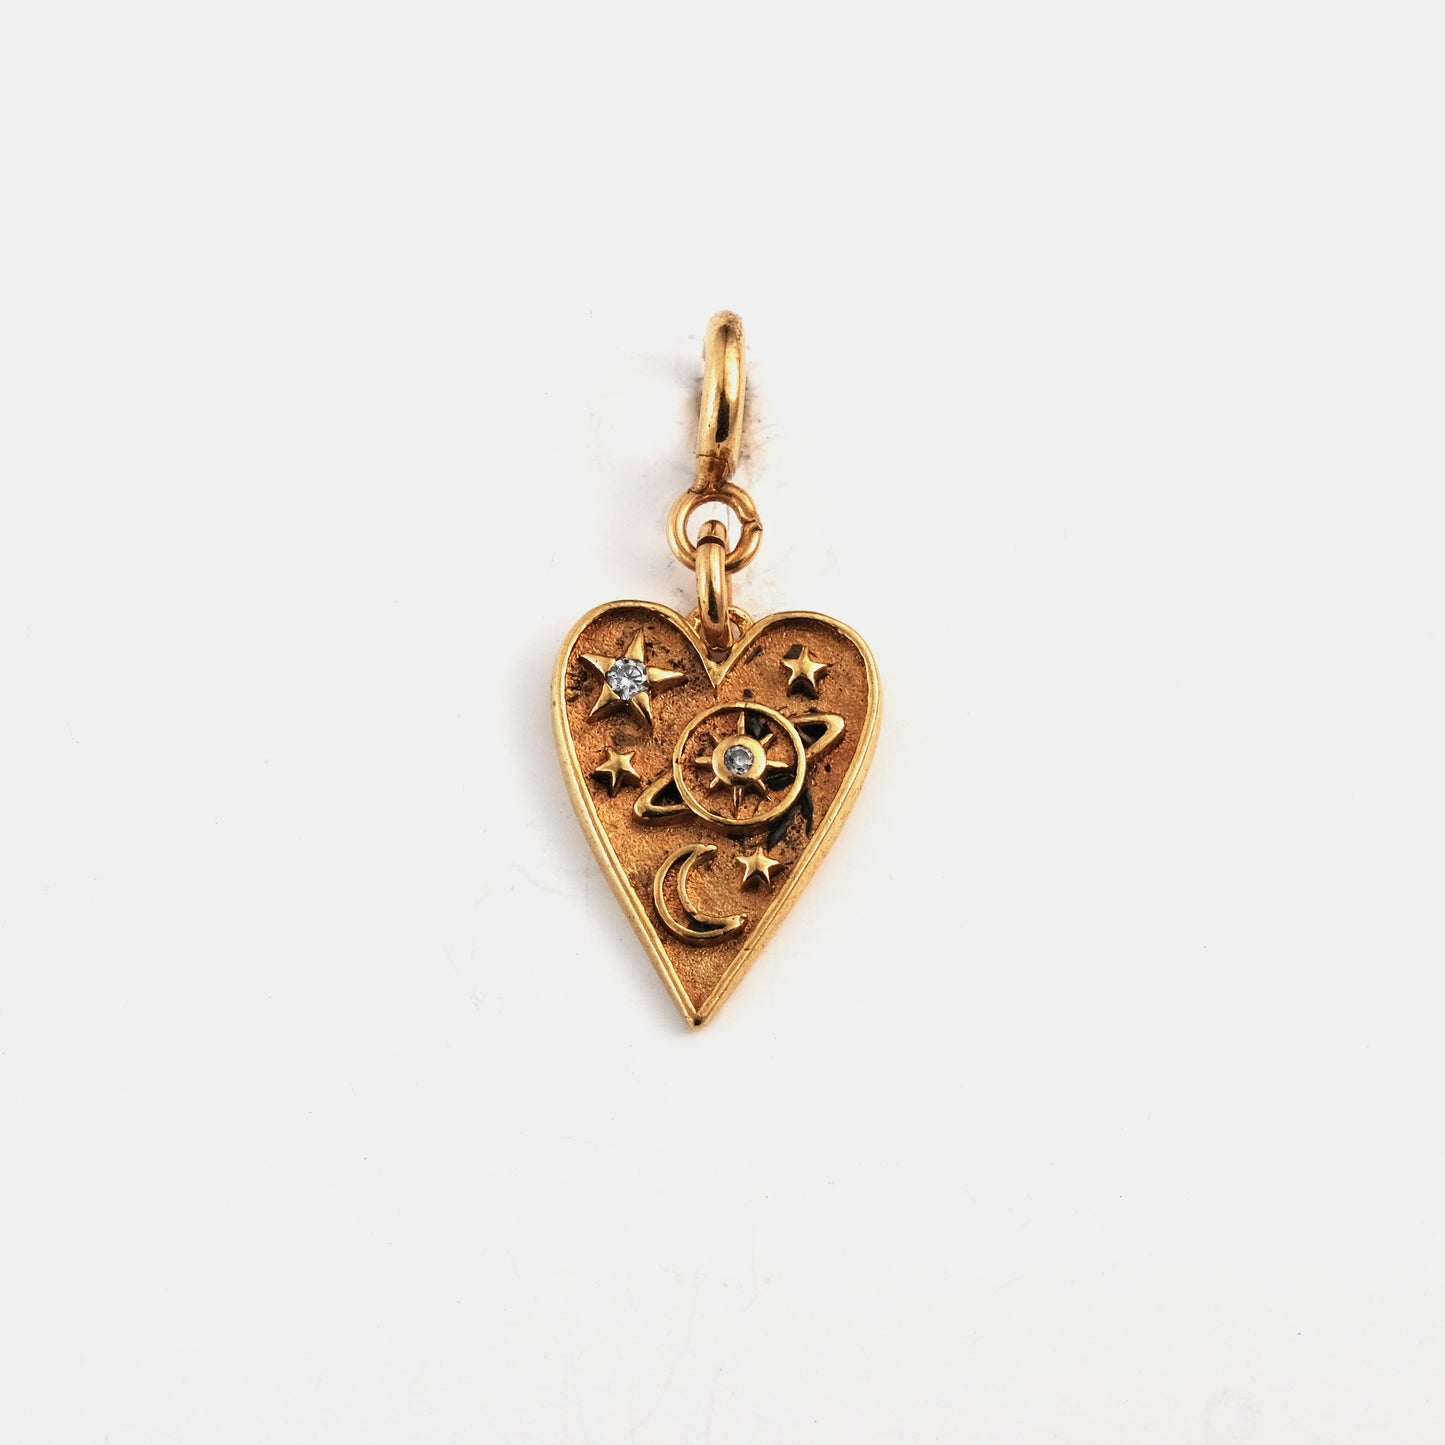 Astro heart pendant